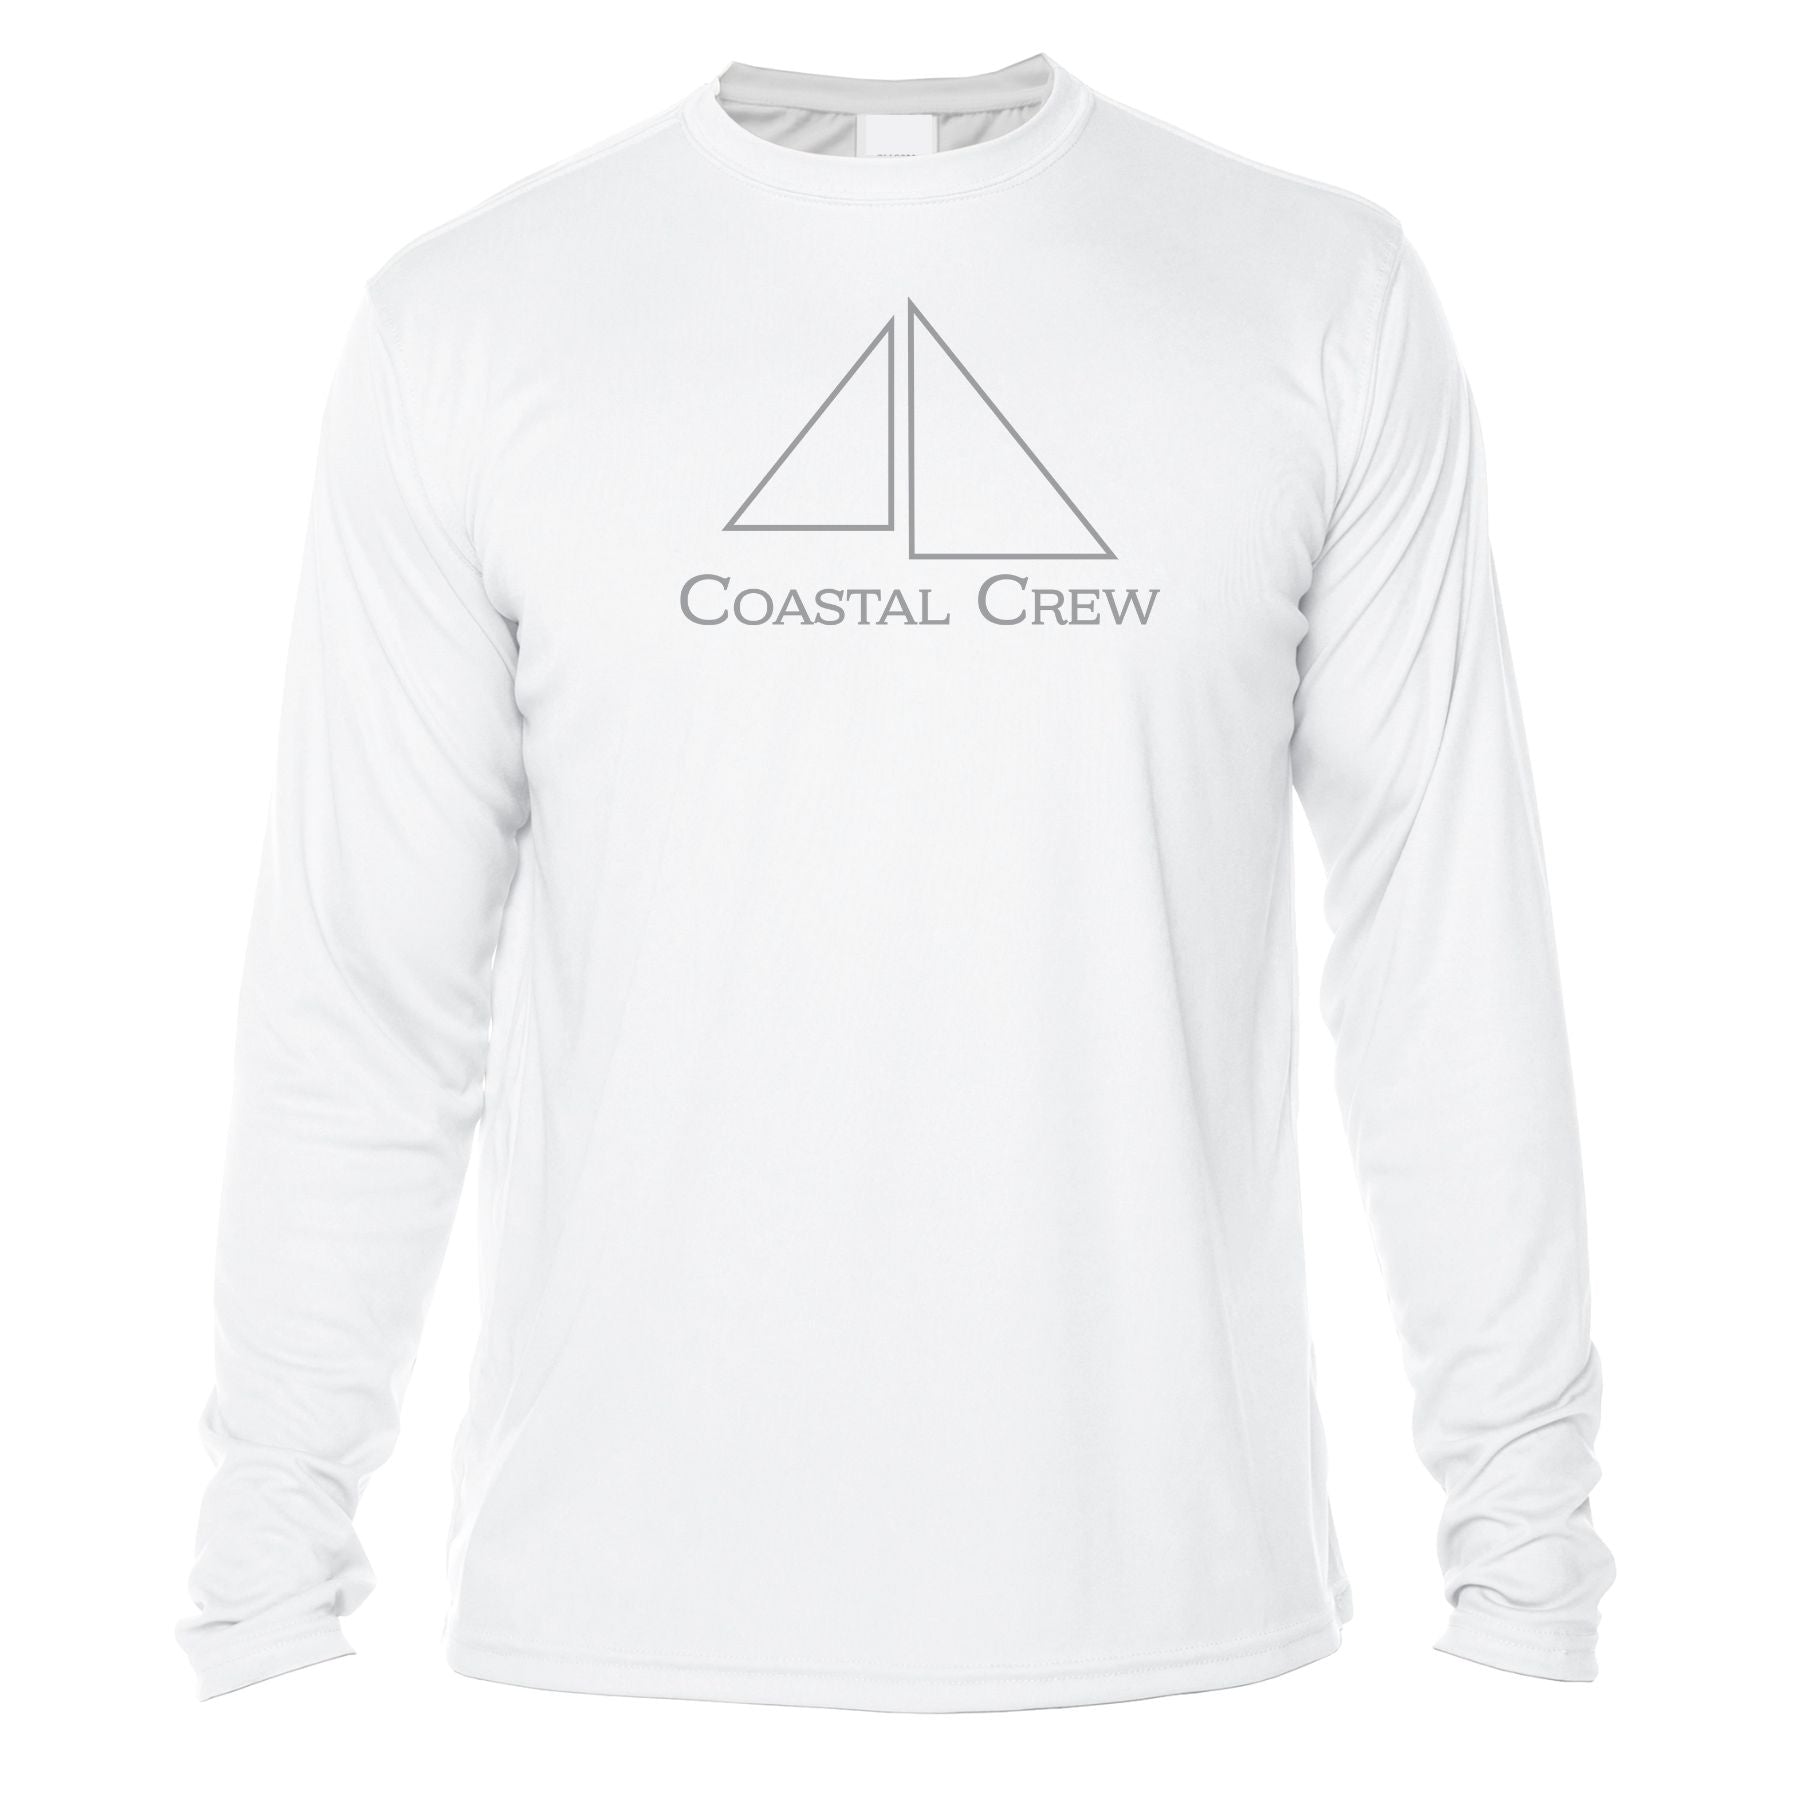 Coastal Crew, UPF 50 Sun Protection Shirts